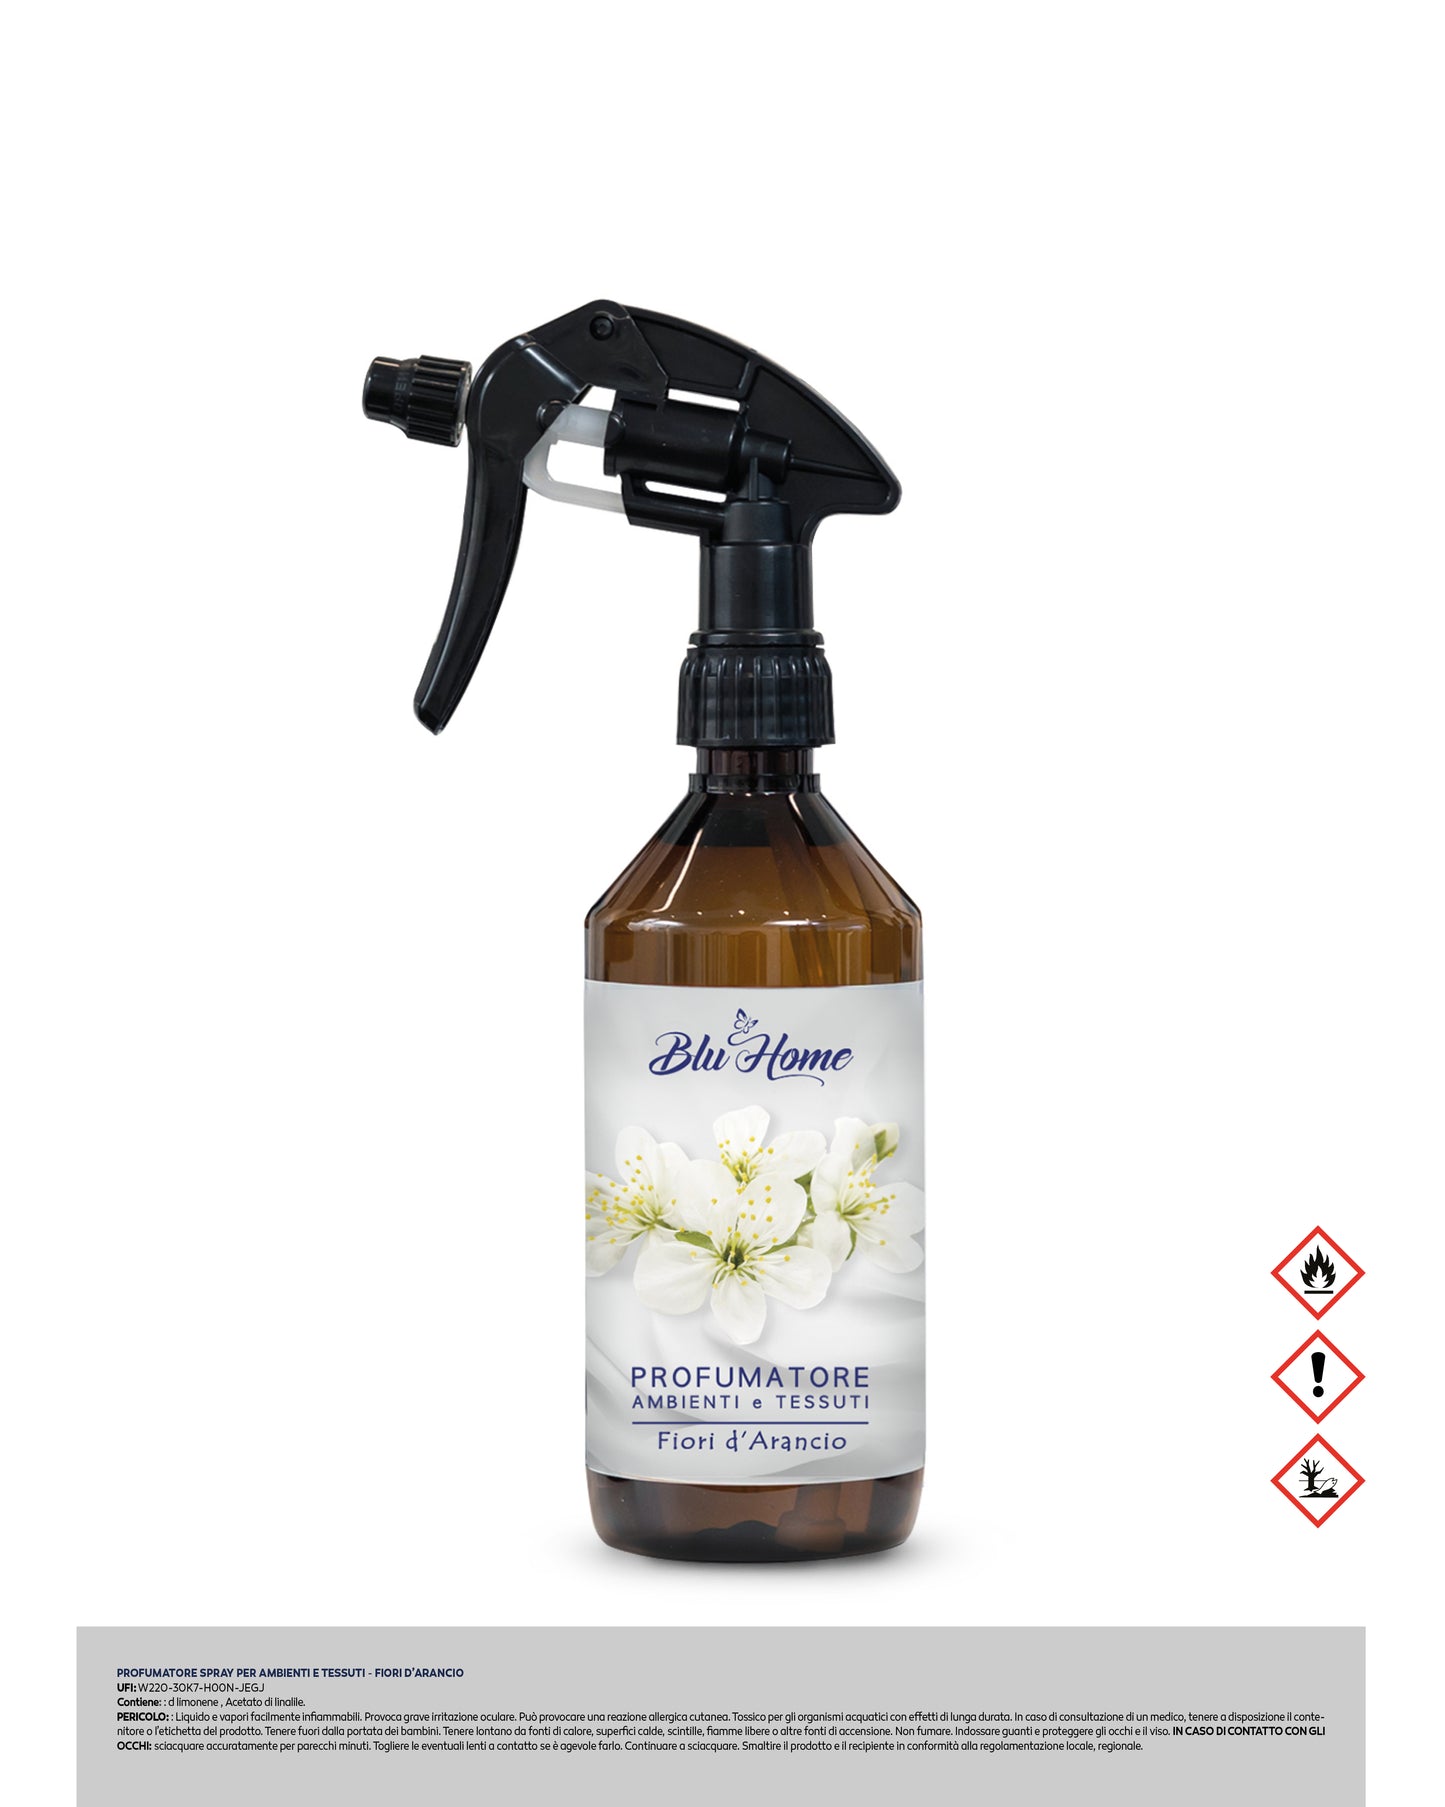 Spray Ambienti e Tessuti – Blu Home Fragrance